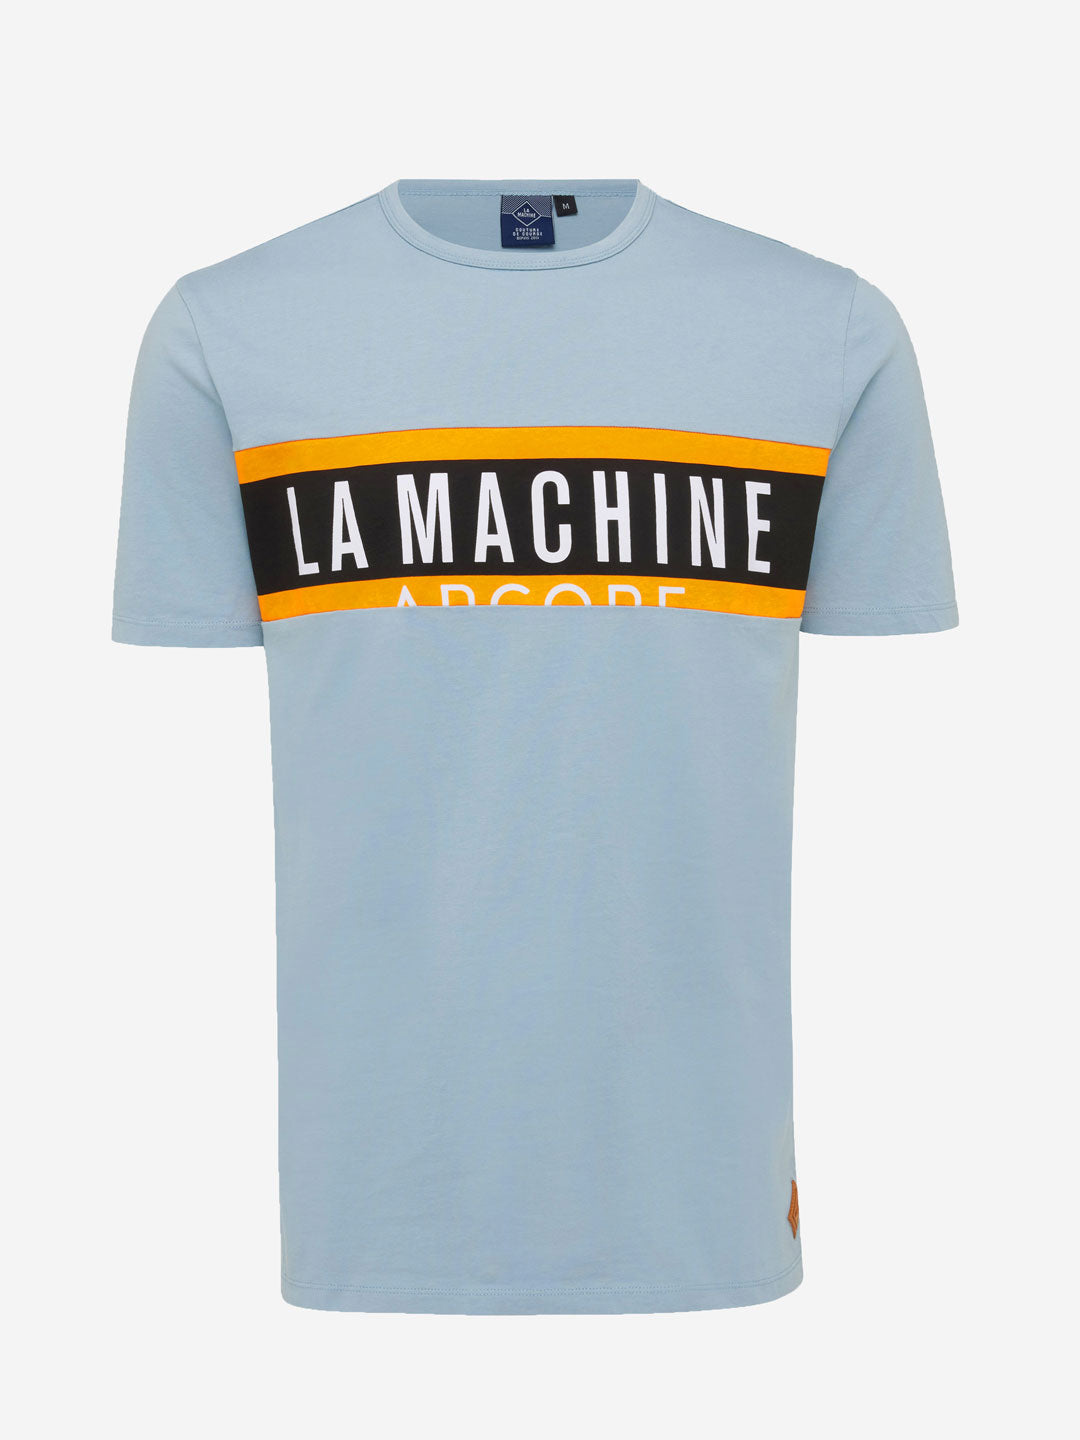 Molteni - The Remix - T-shirt - Vintage Blue - La Machine Cycle Club